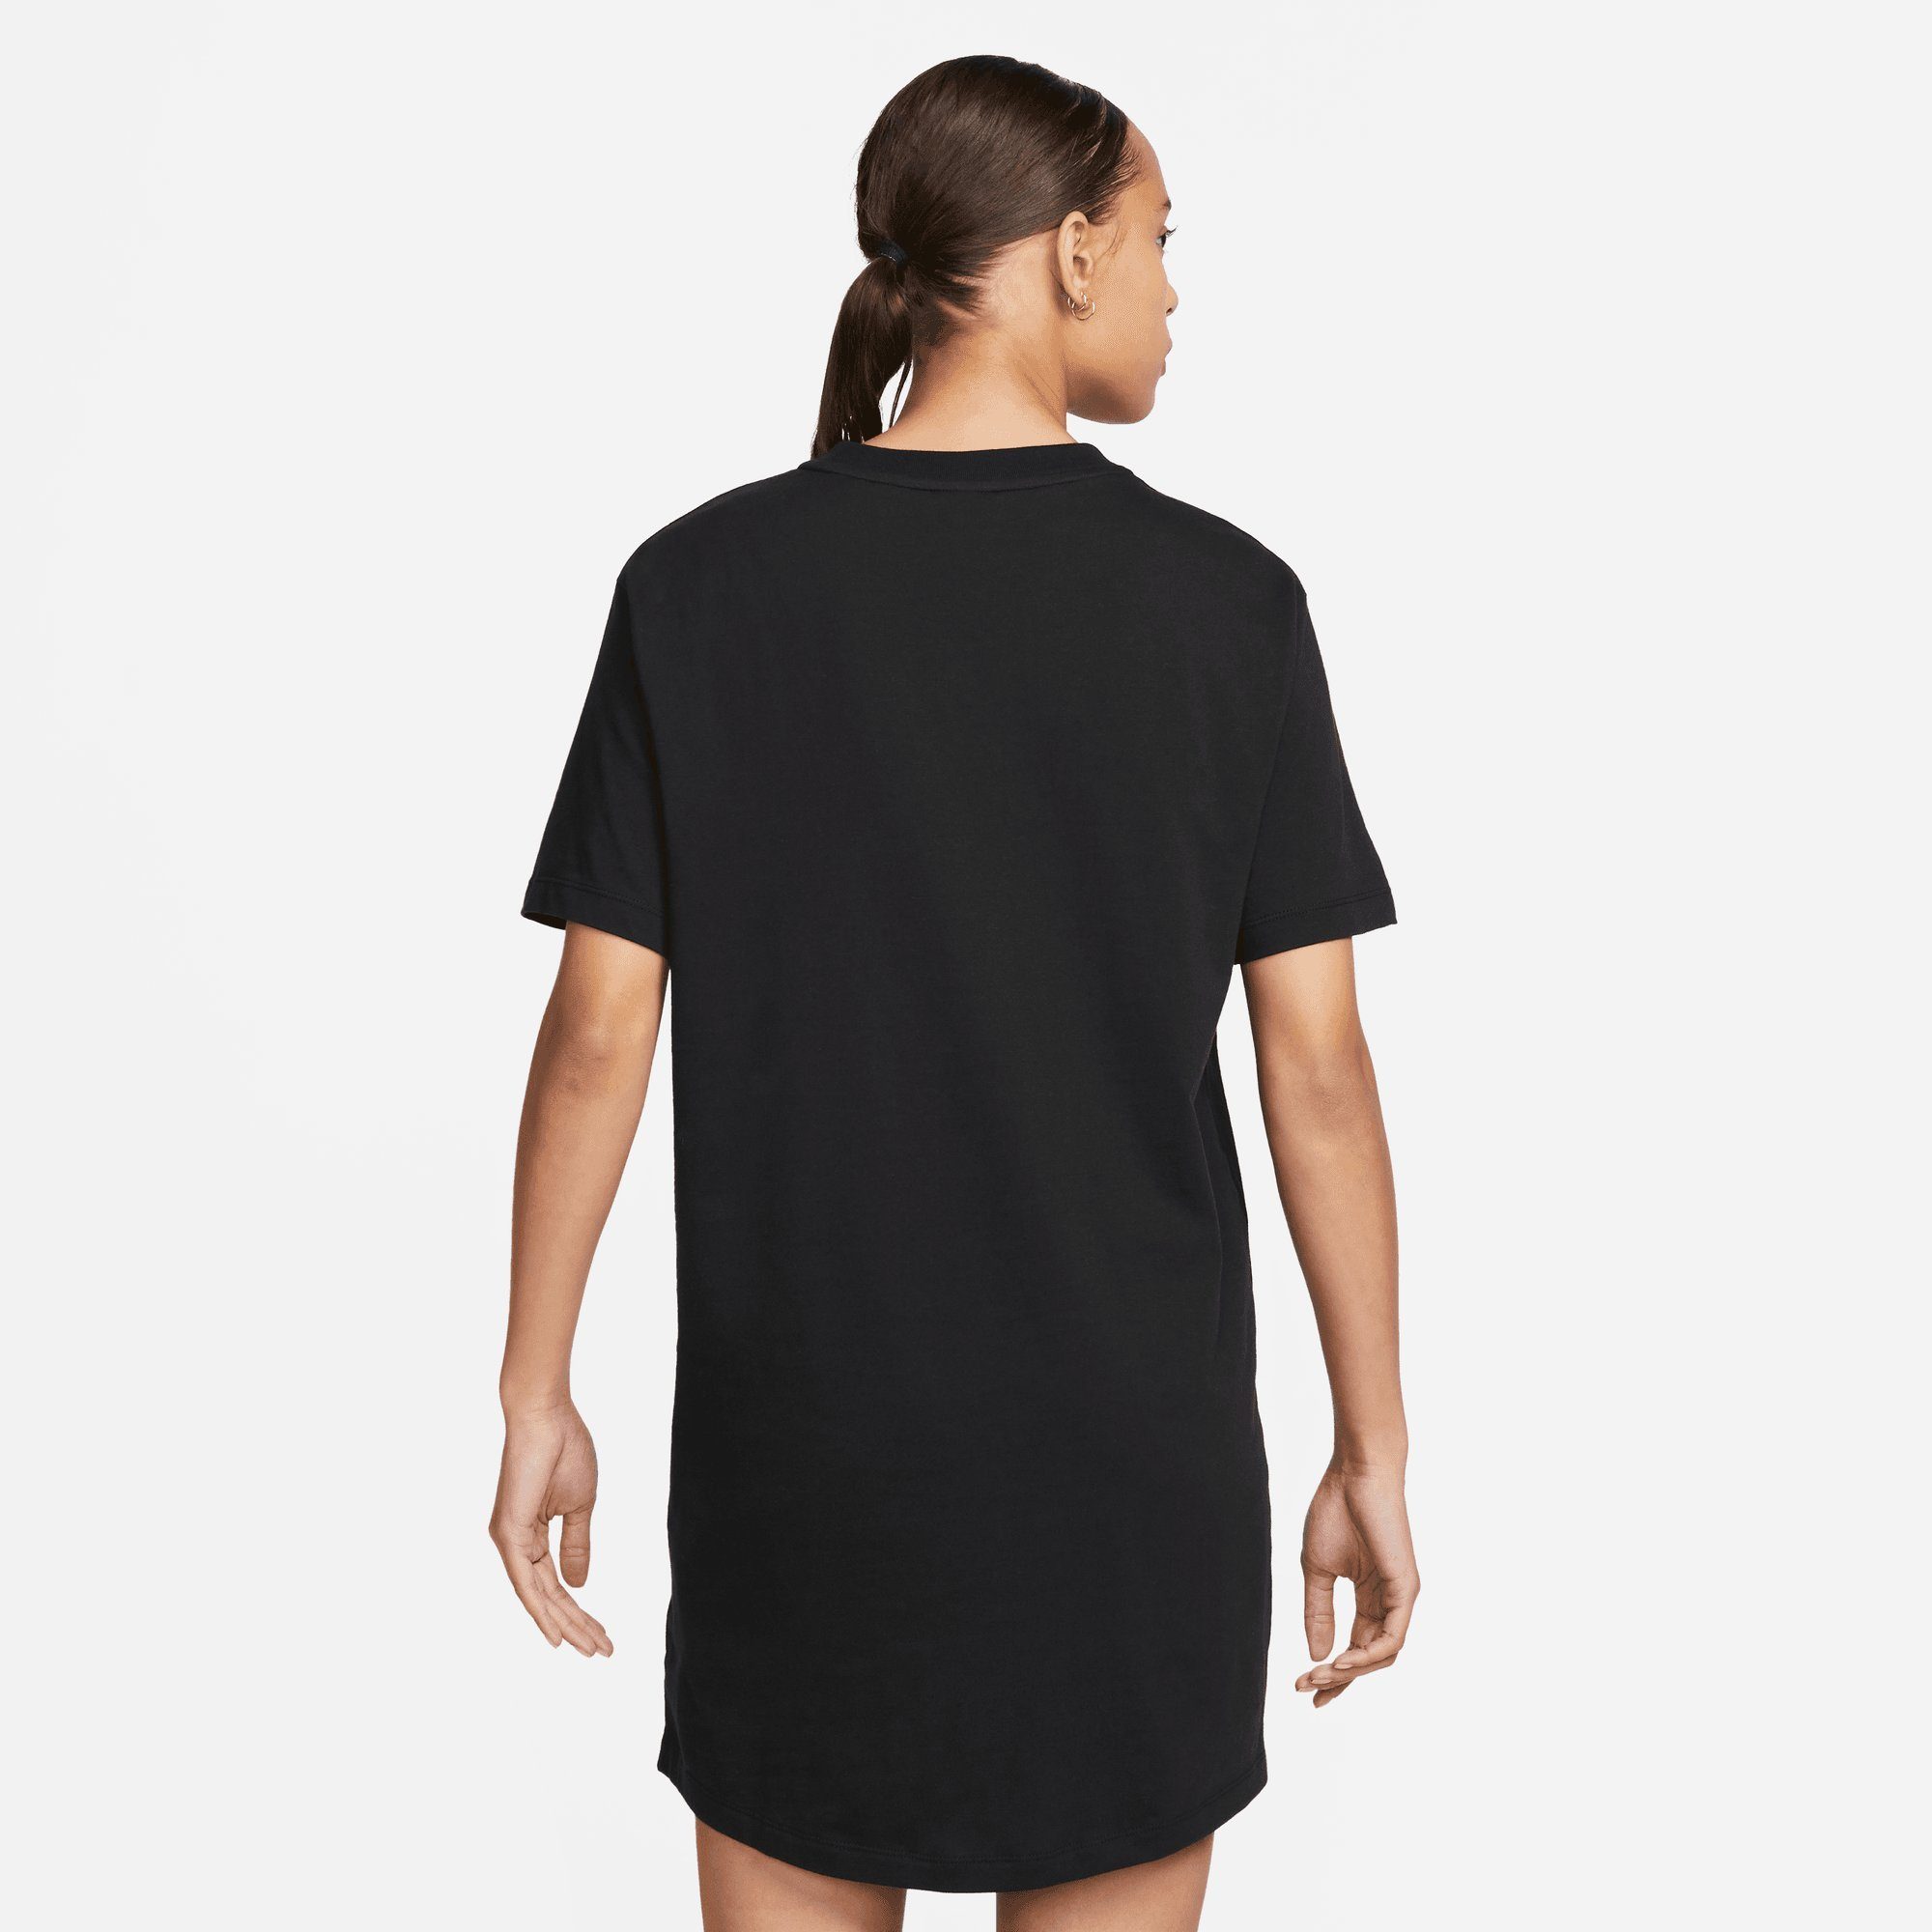 BLACK/WHITE ESSENTIAL DRESS Sommerkleid Nike WOMEN'S Sportswear SHORT-SLEEVE